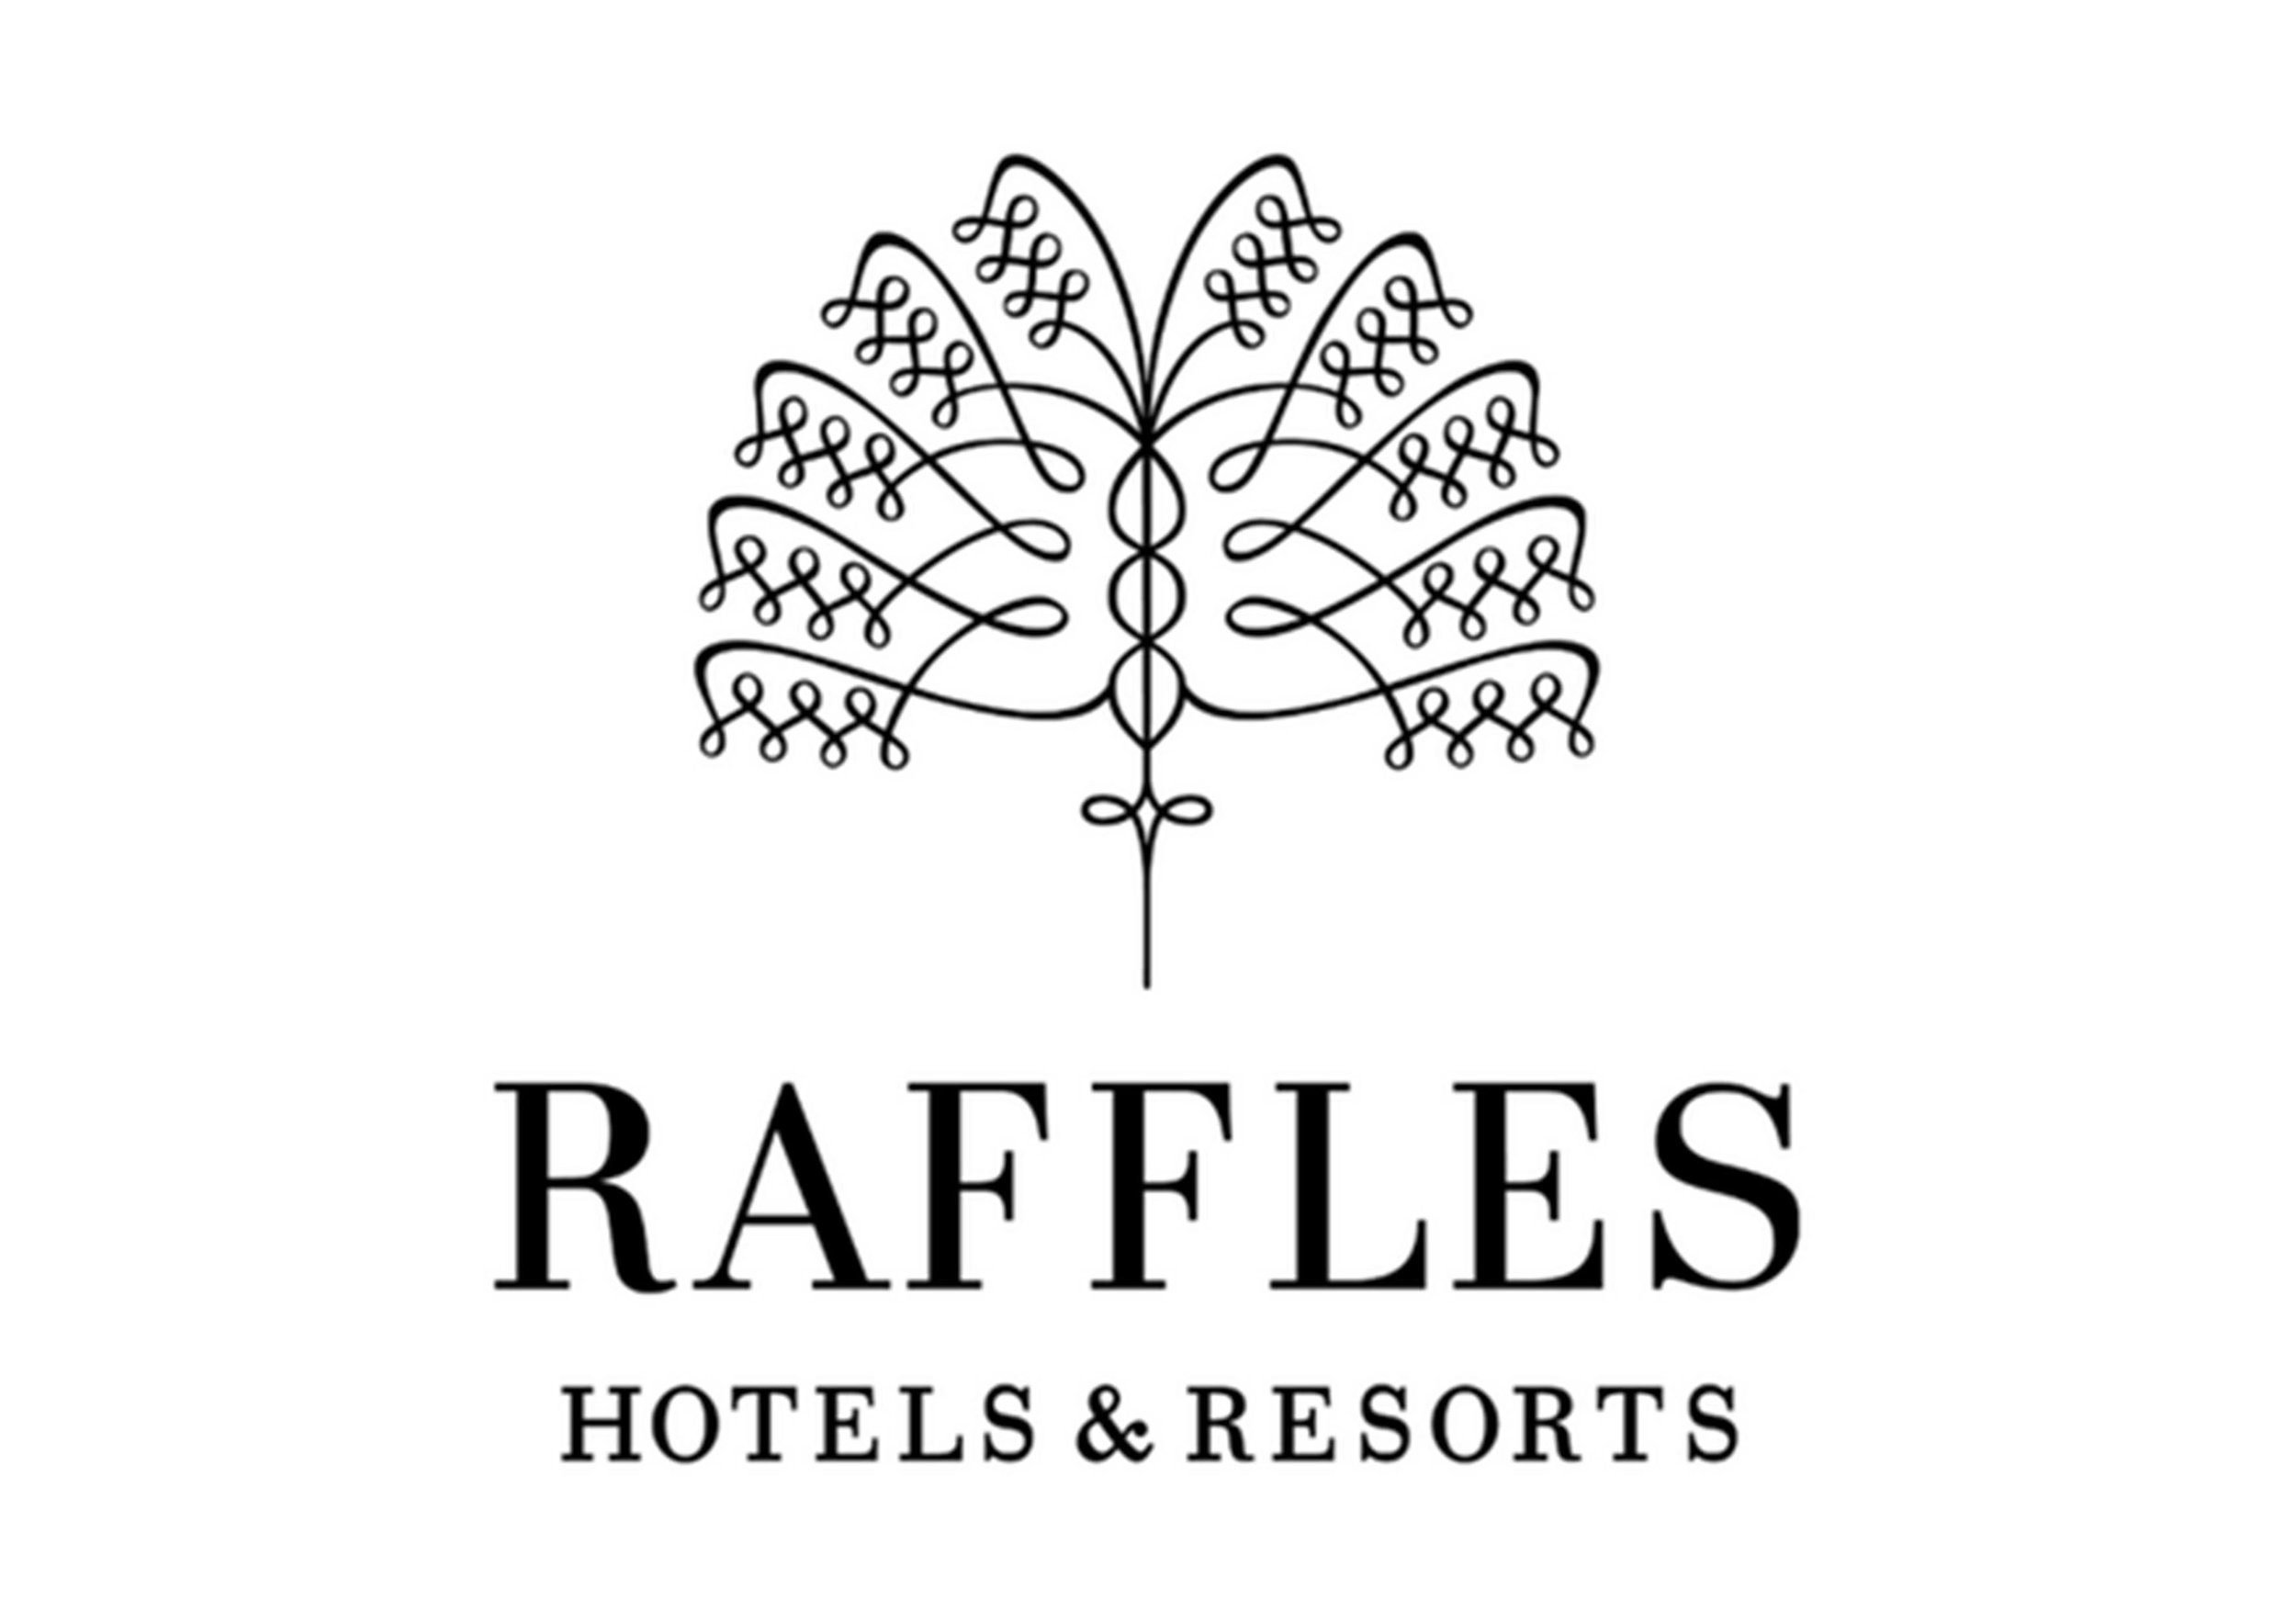 Rafflies Hotel.jpg